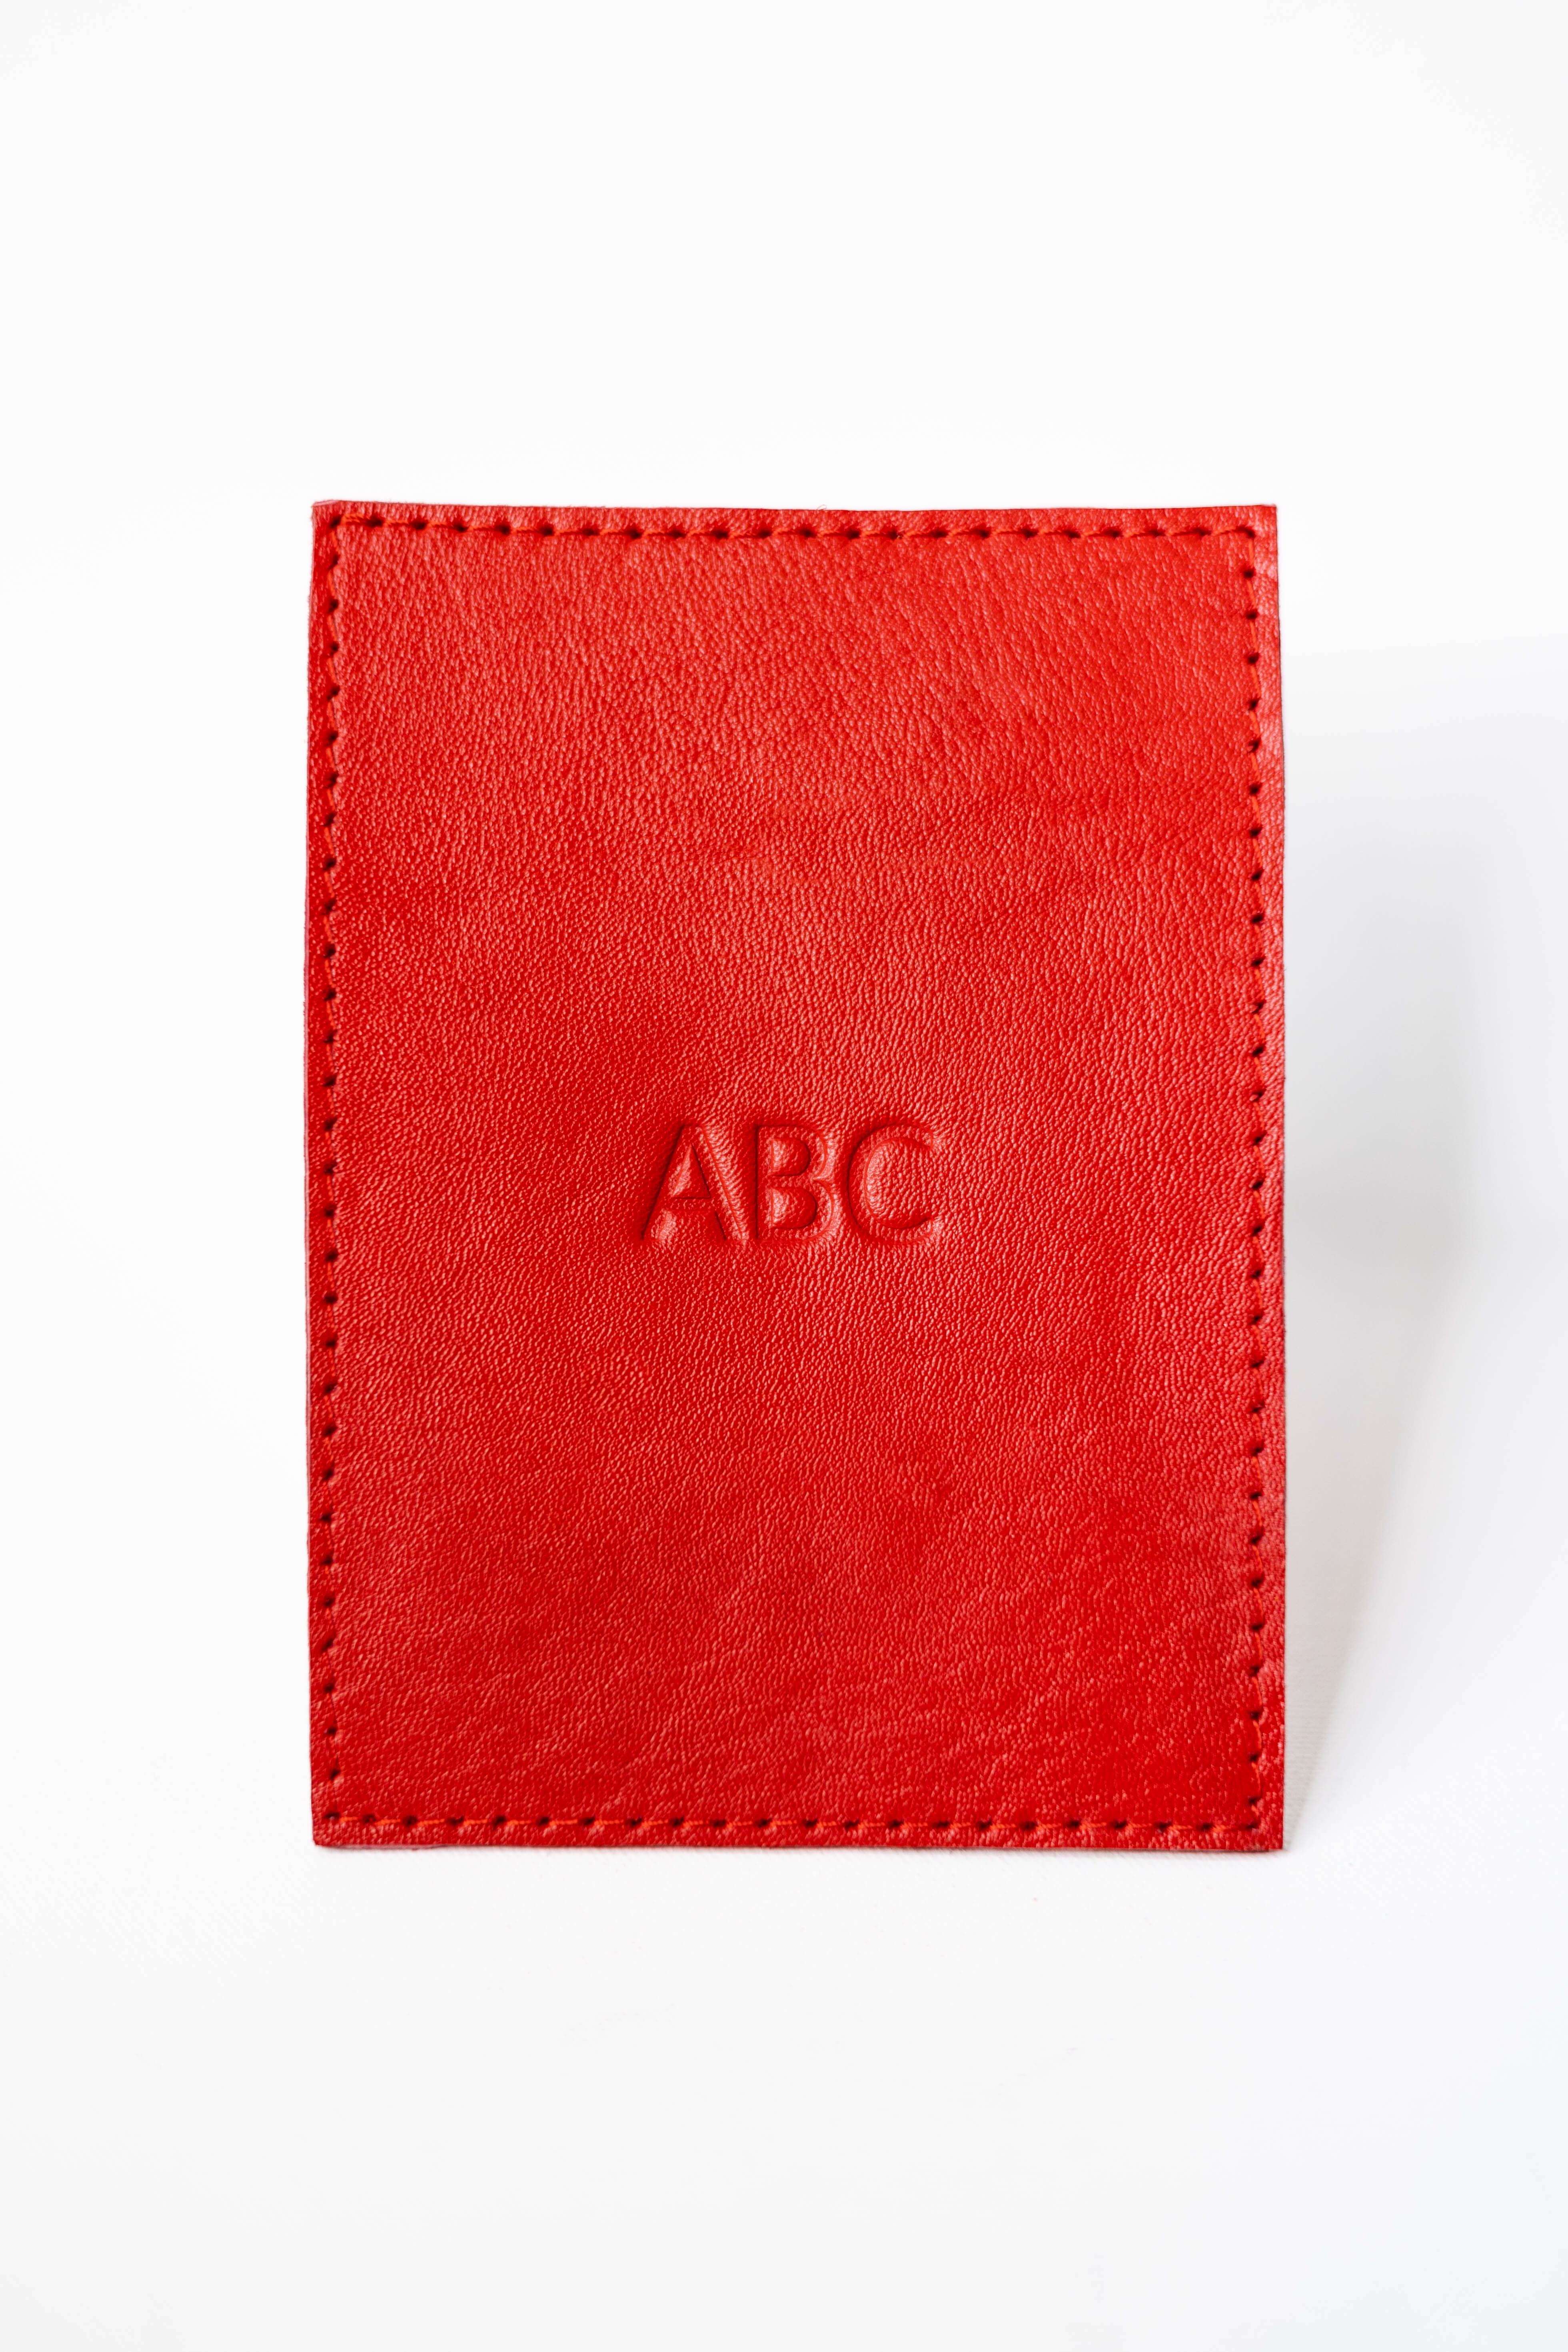 Women Long Wallet PU Leather Money Clutch Handbags Big Zipper Purses For  Cash Card Holders Shoulder Bags(Red) - Walmart.com